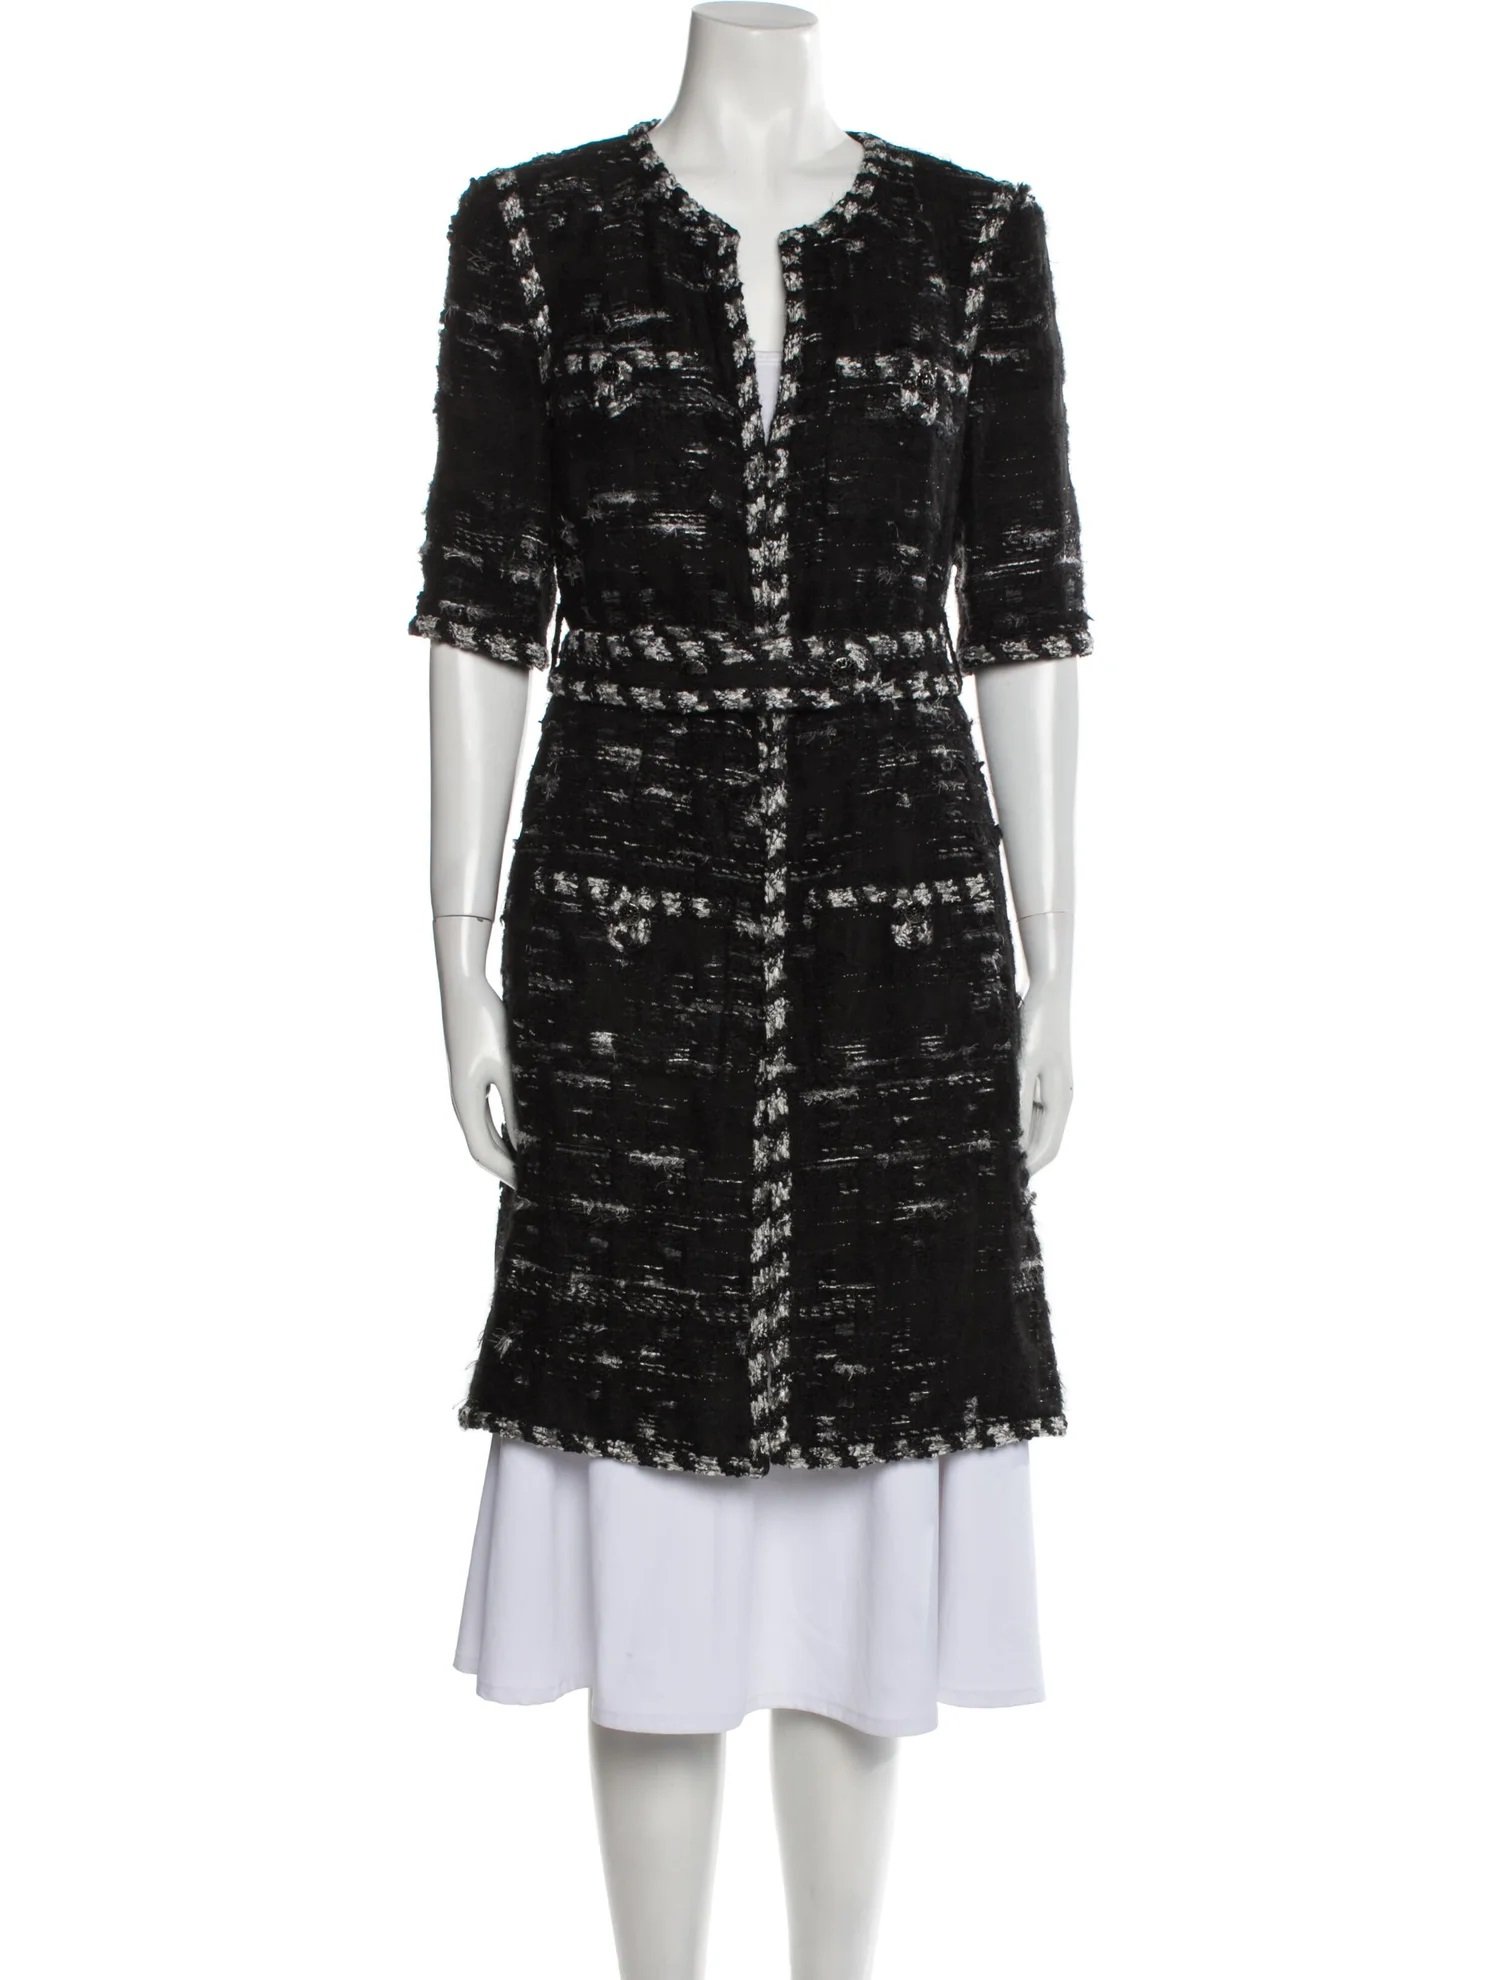 Chanel Wool Evening Coat.jpg